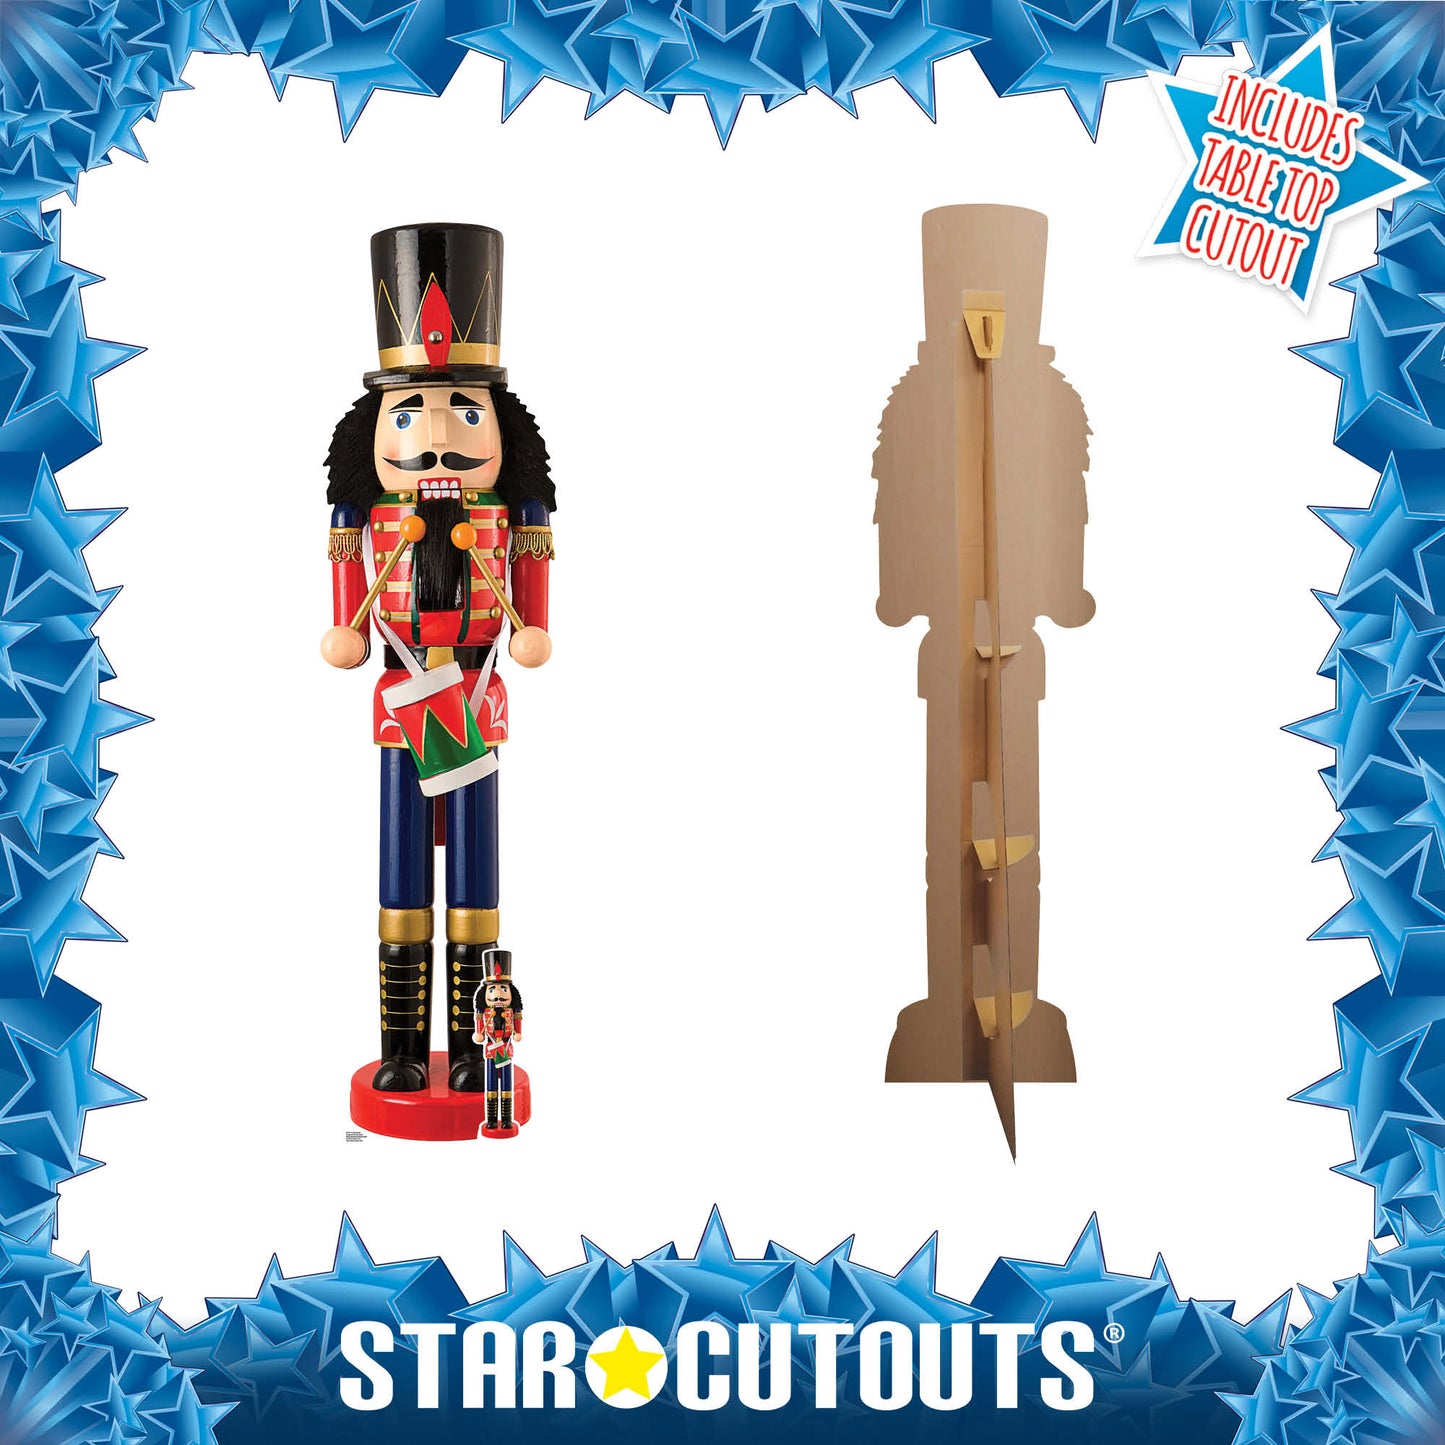 SC4197 Christmas Nutcracker Doll Cardboard Cut Out Height 194cm - Star Cutouts